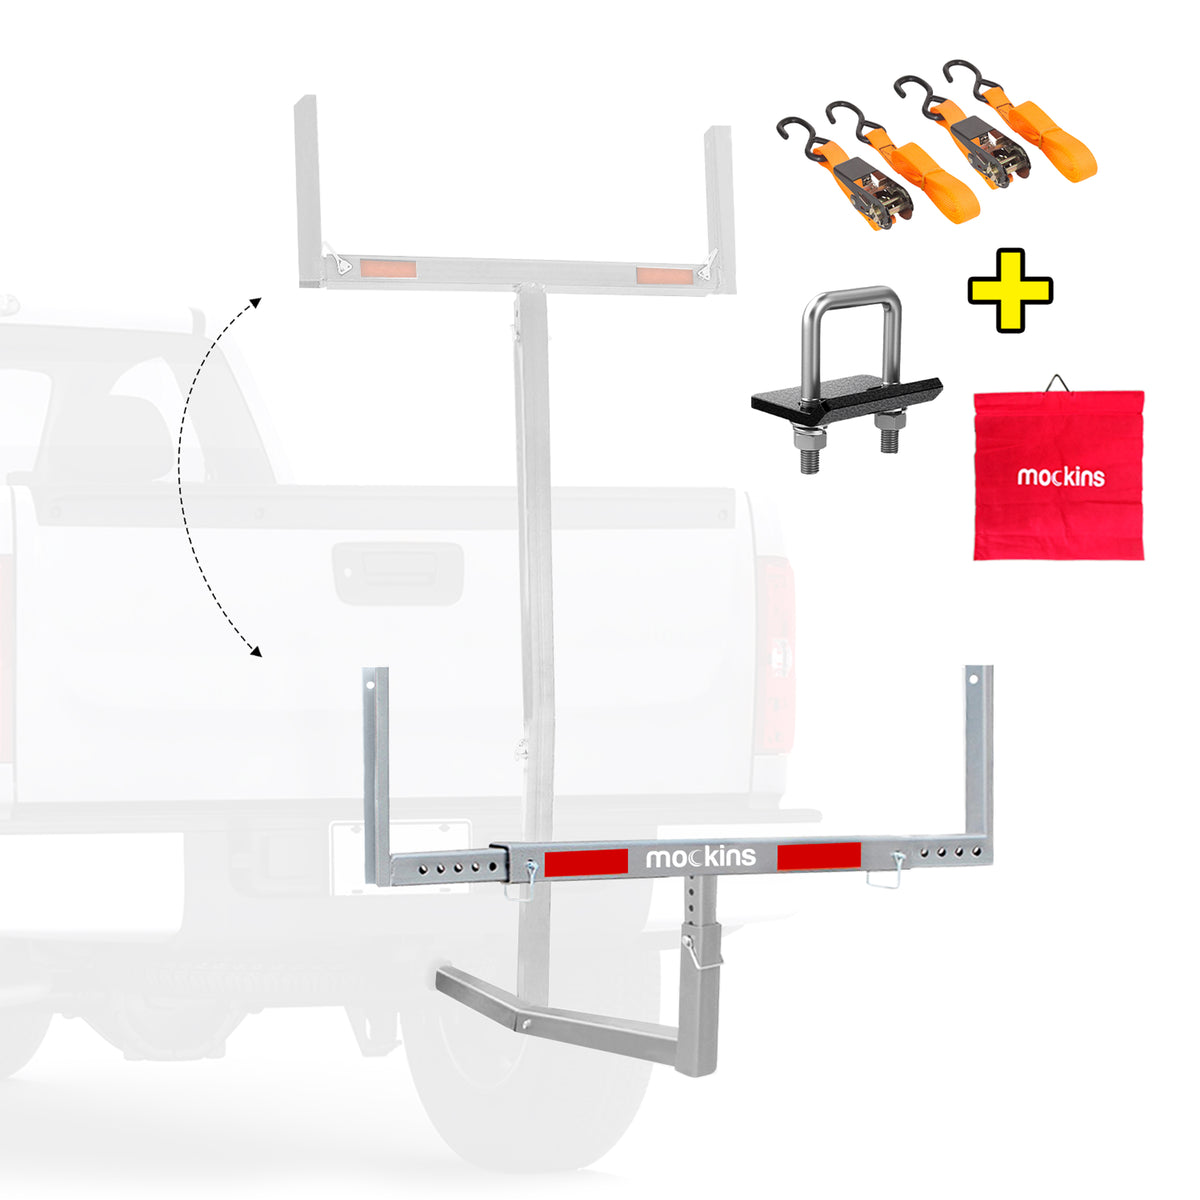 2-in-1 Design Pickup Truck Bed Extender &amp; Ratchet Straps